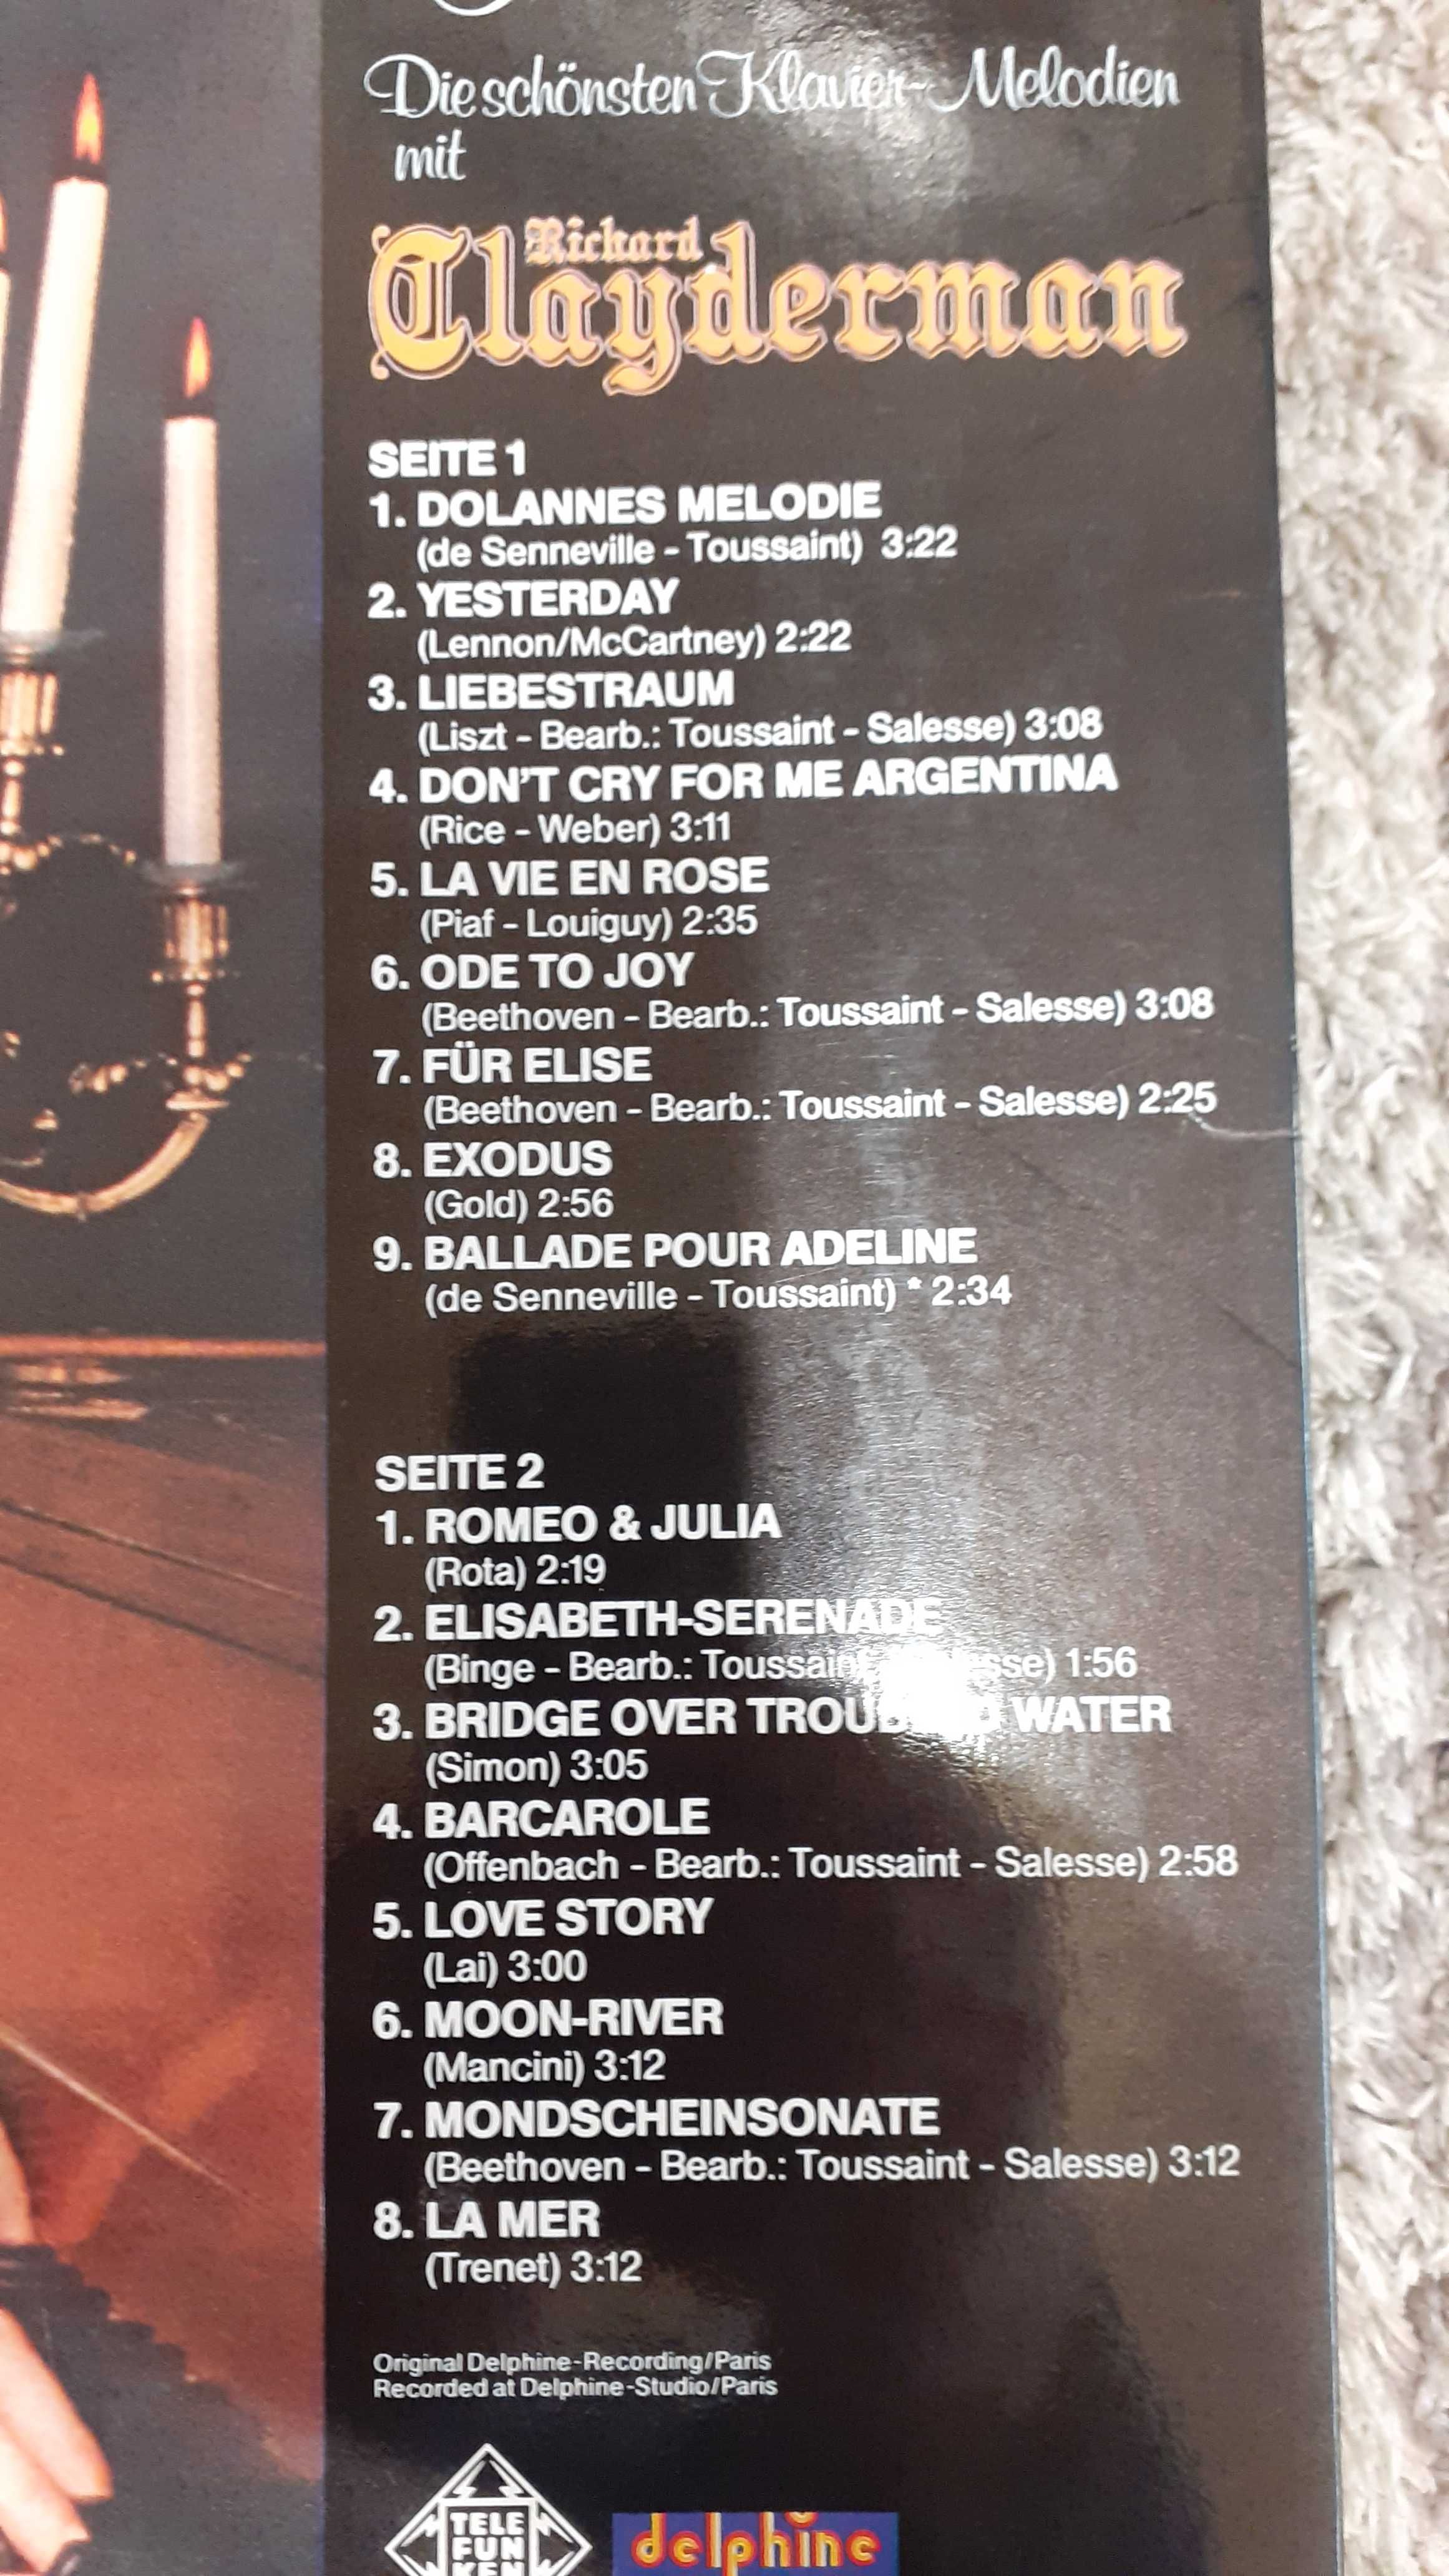 Discuri vinyl Bee Gees  Abba  Julio Iglesias Clayderman